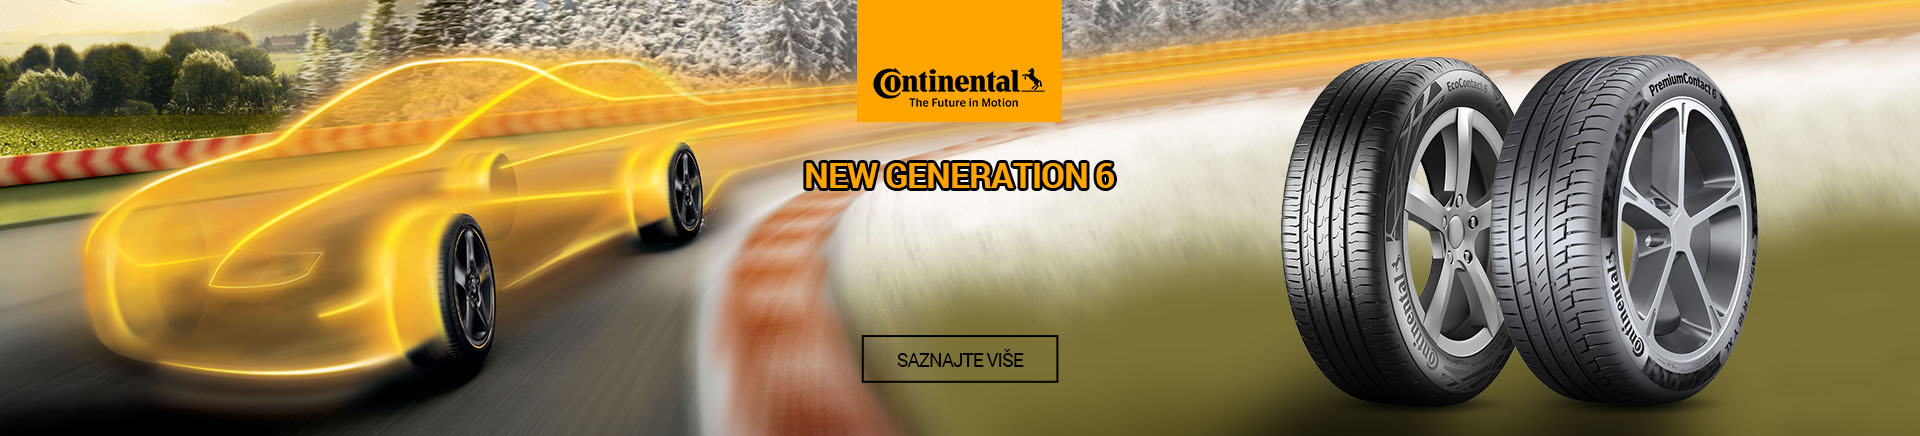 RS_HR_Continental_New generation 6_WIDESCREEN 1920 X 436.jpg